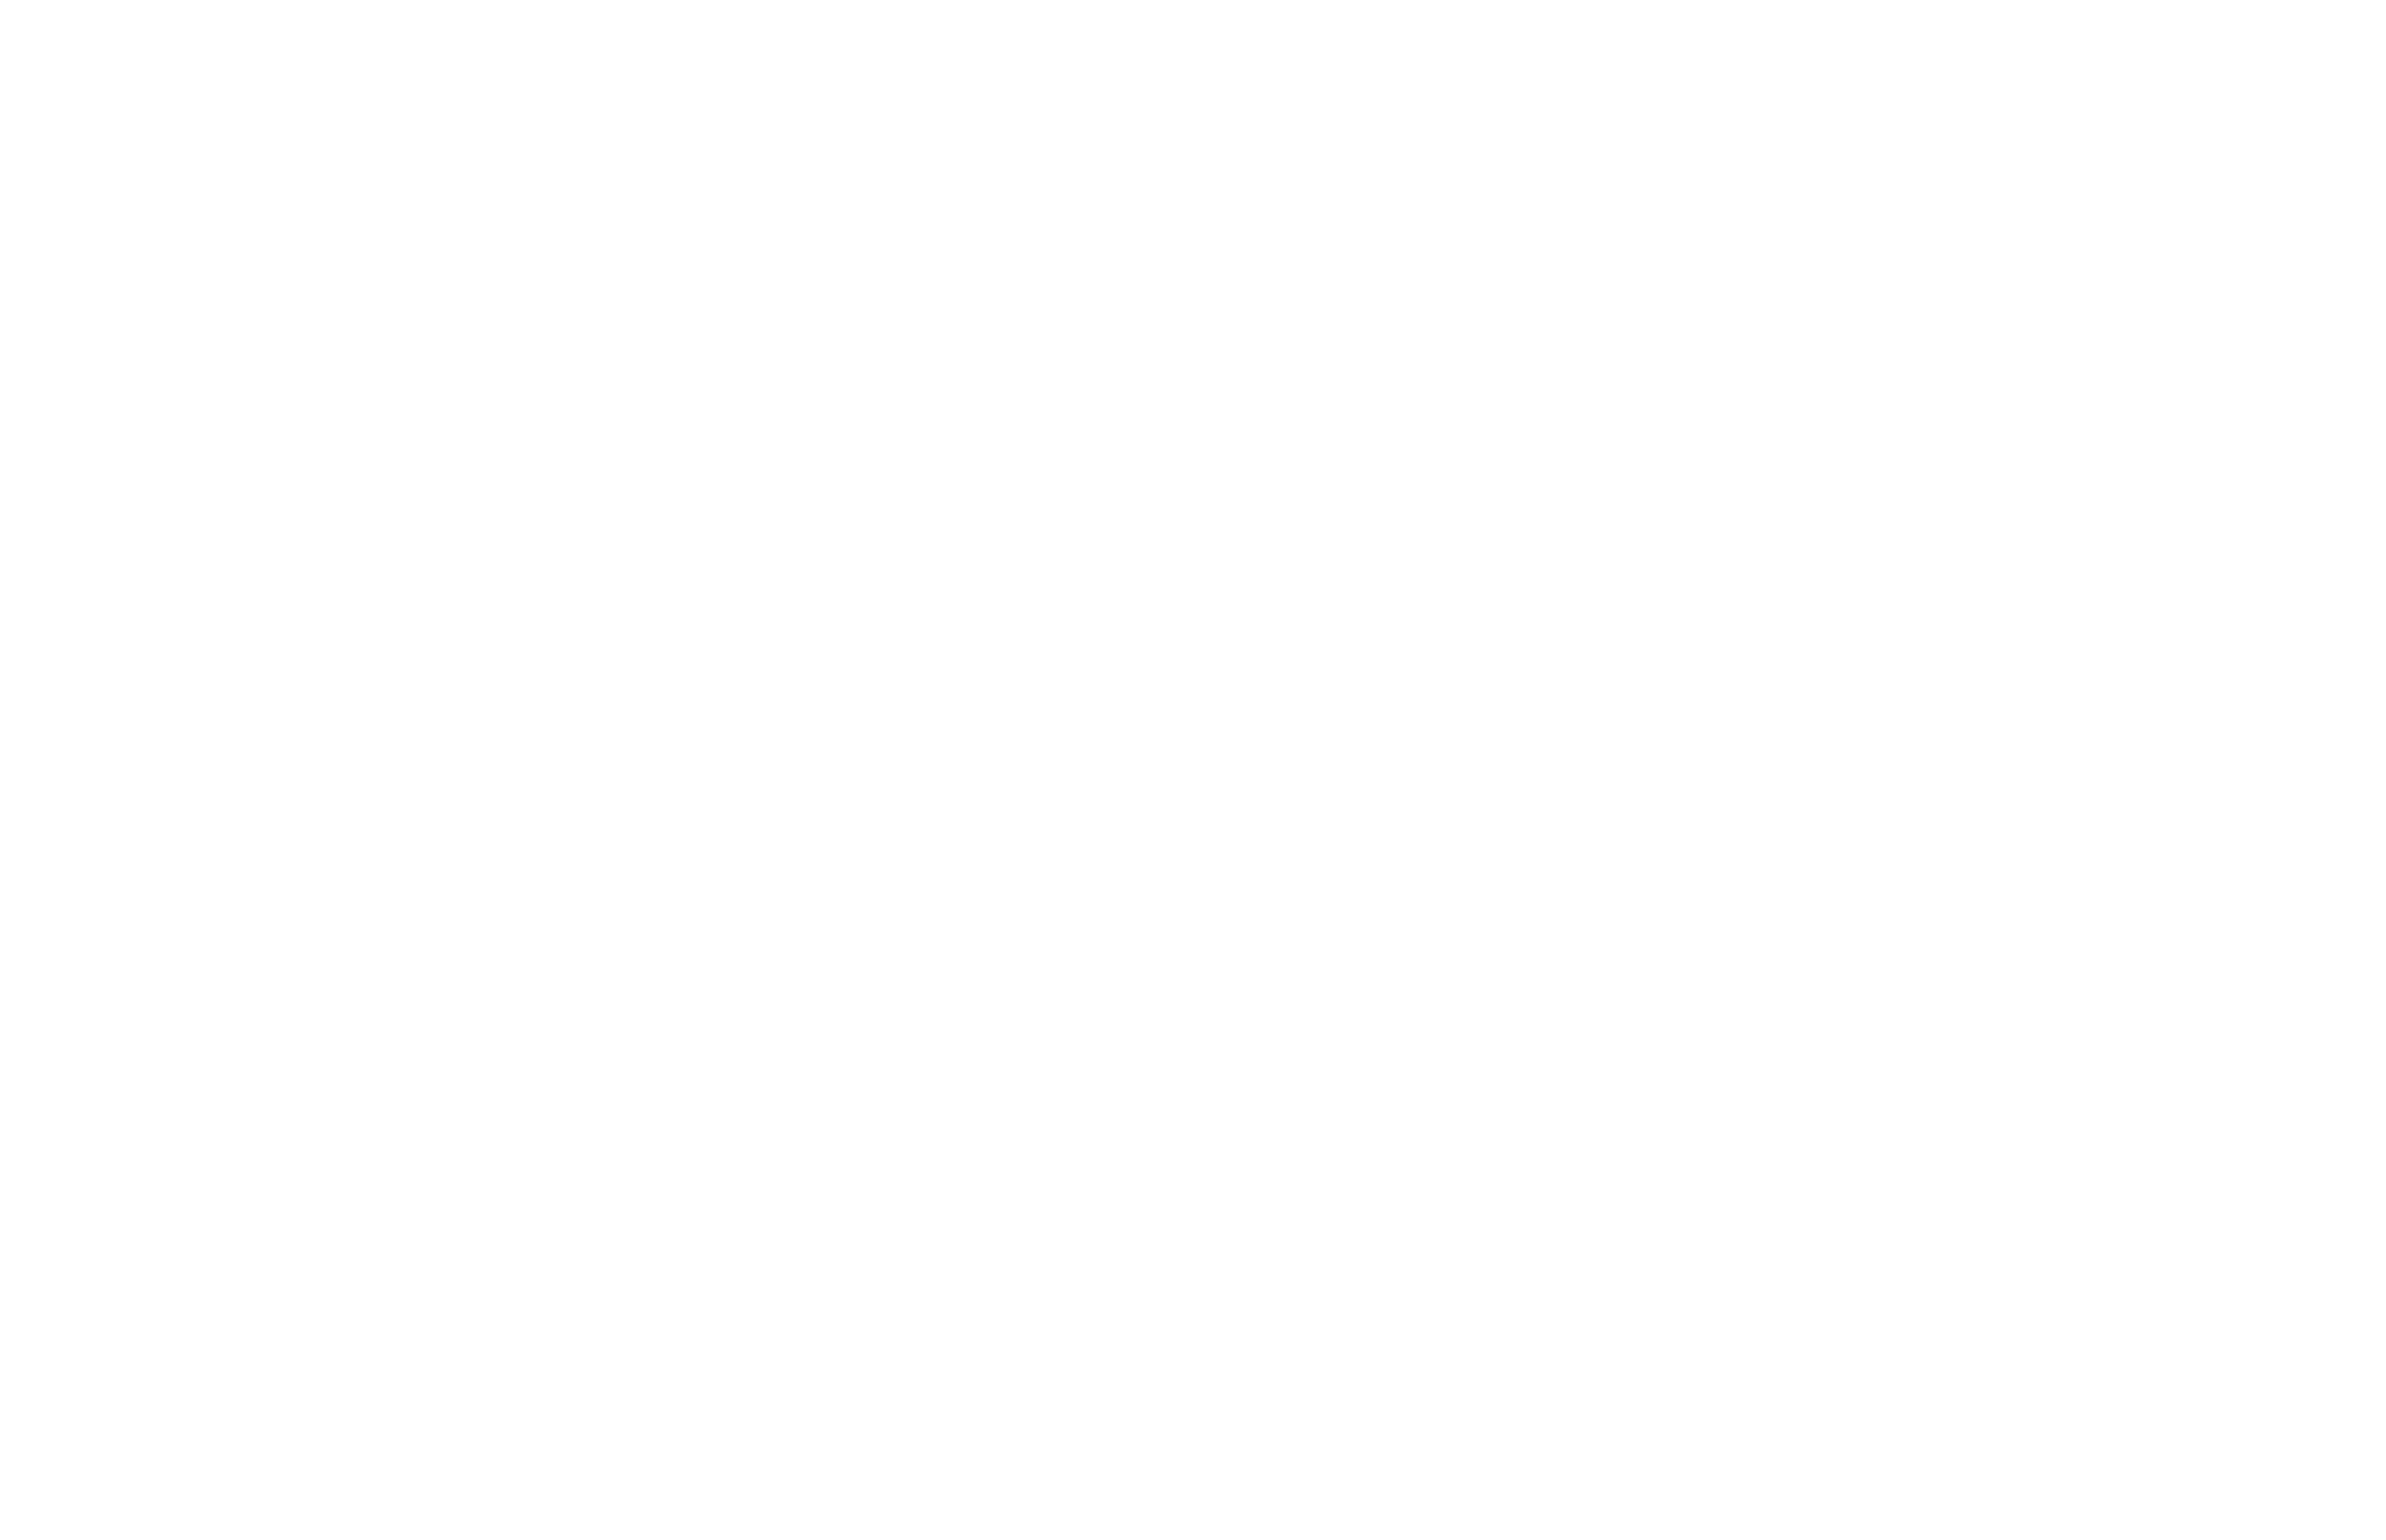 Oman Investment Corporation